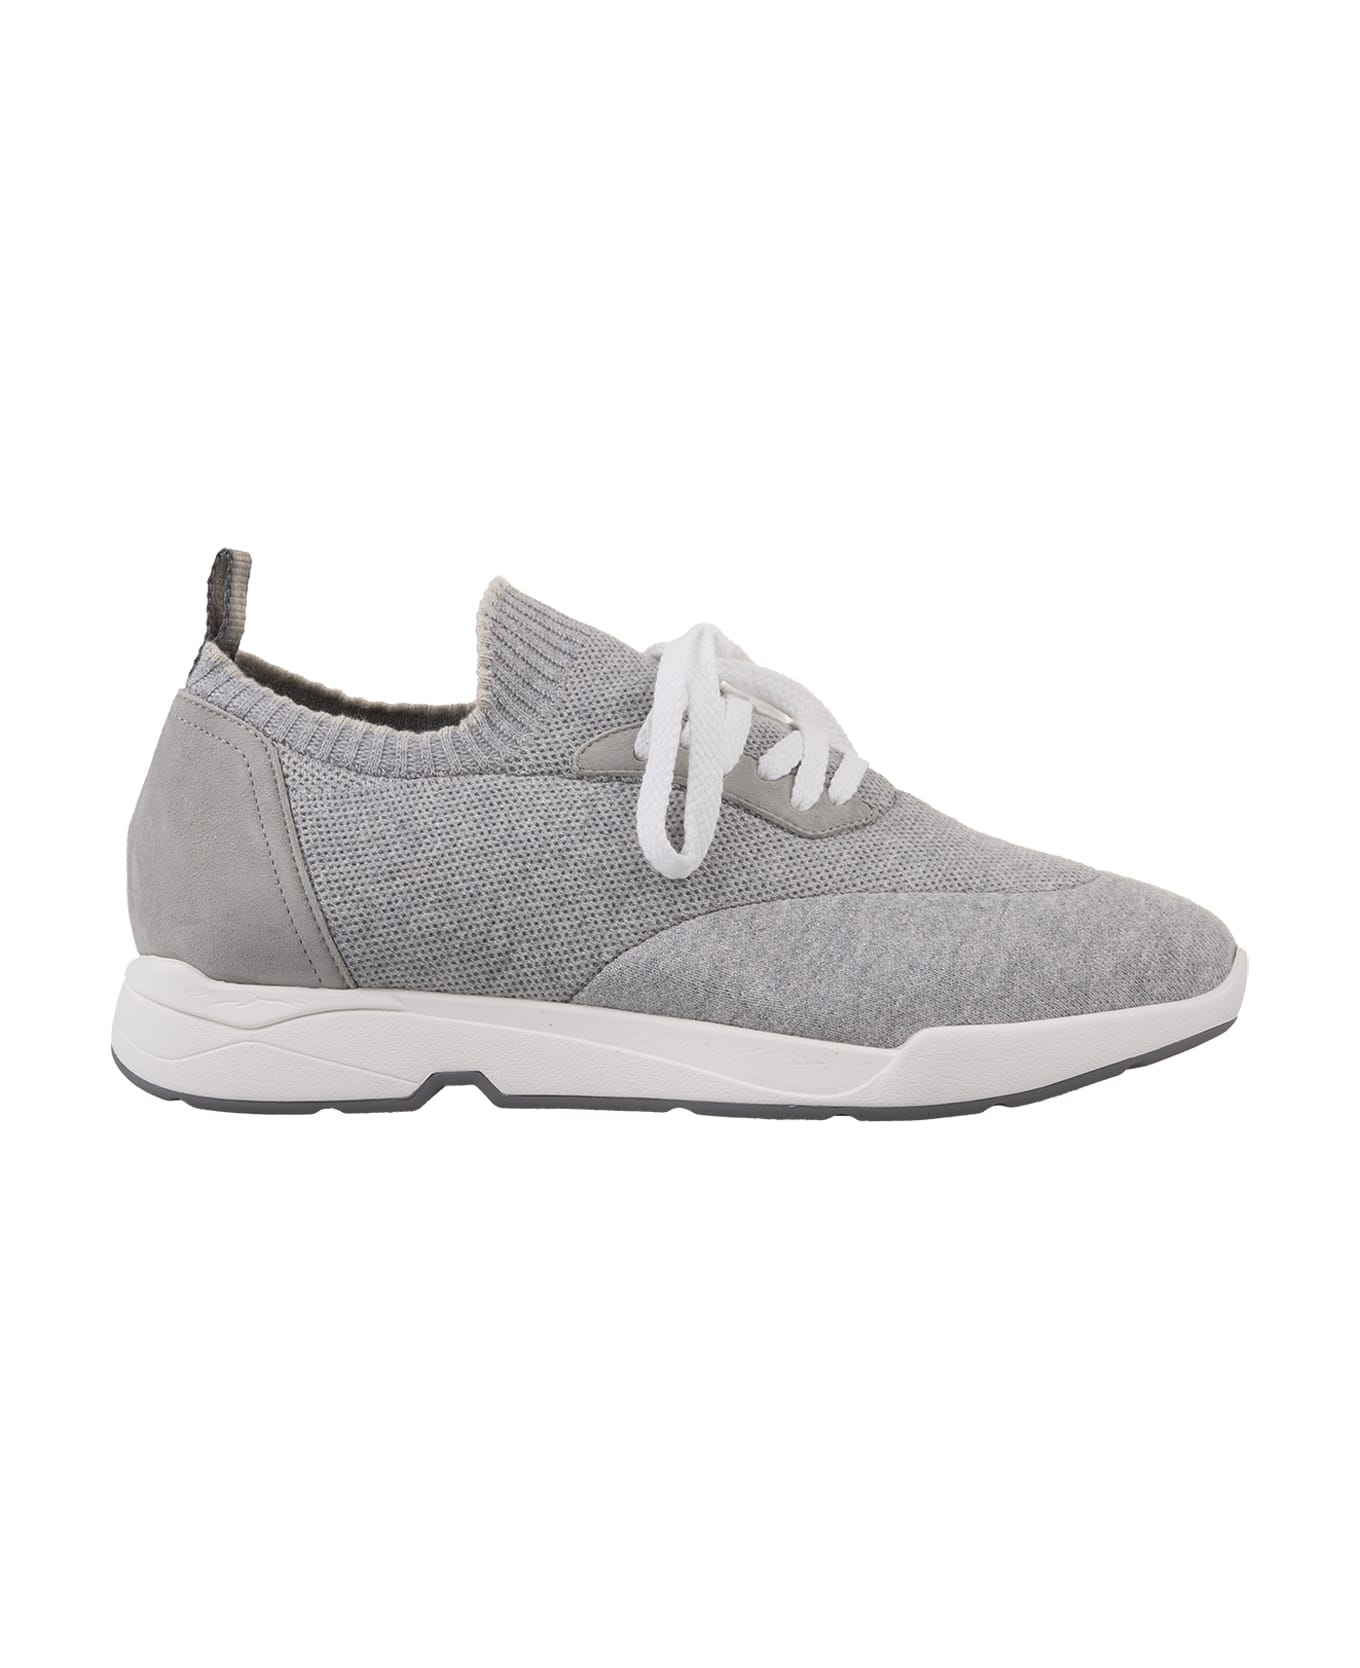 Andrea Ventura W-dragon Sneakers In Grey Fashion Fabric - Grey